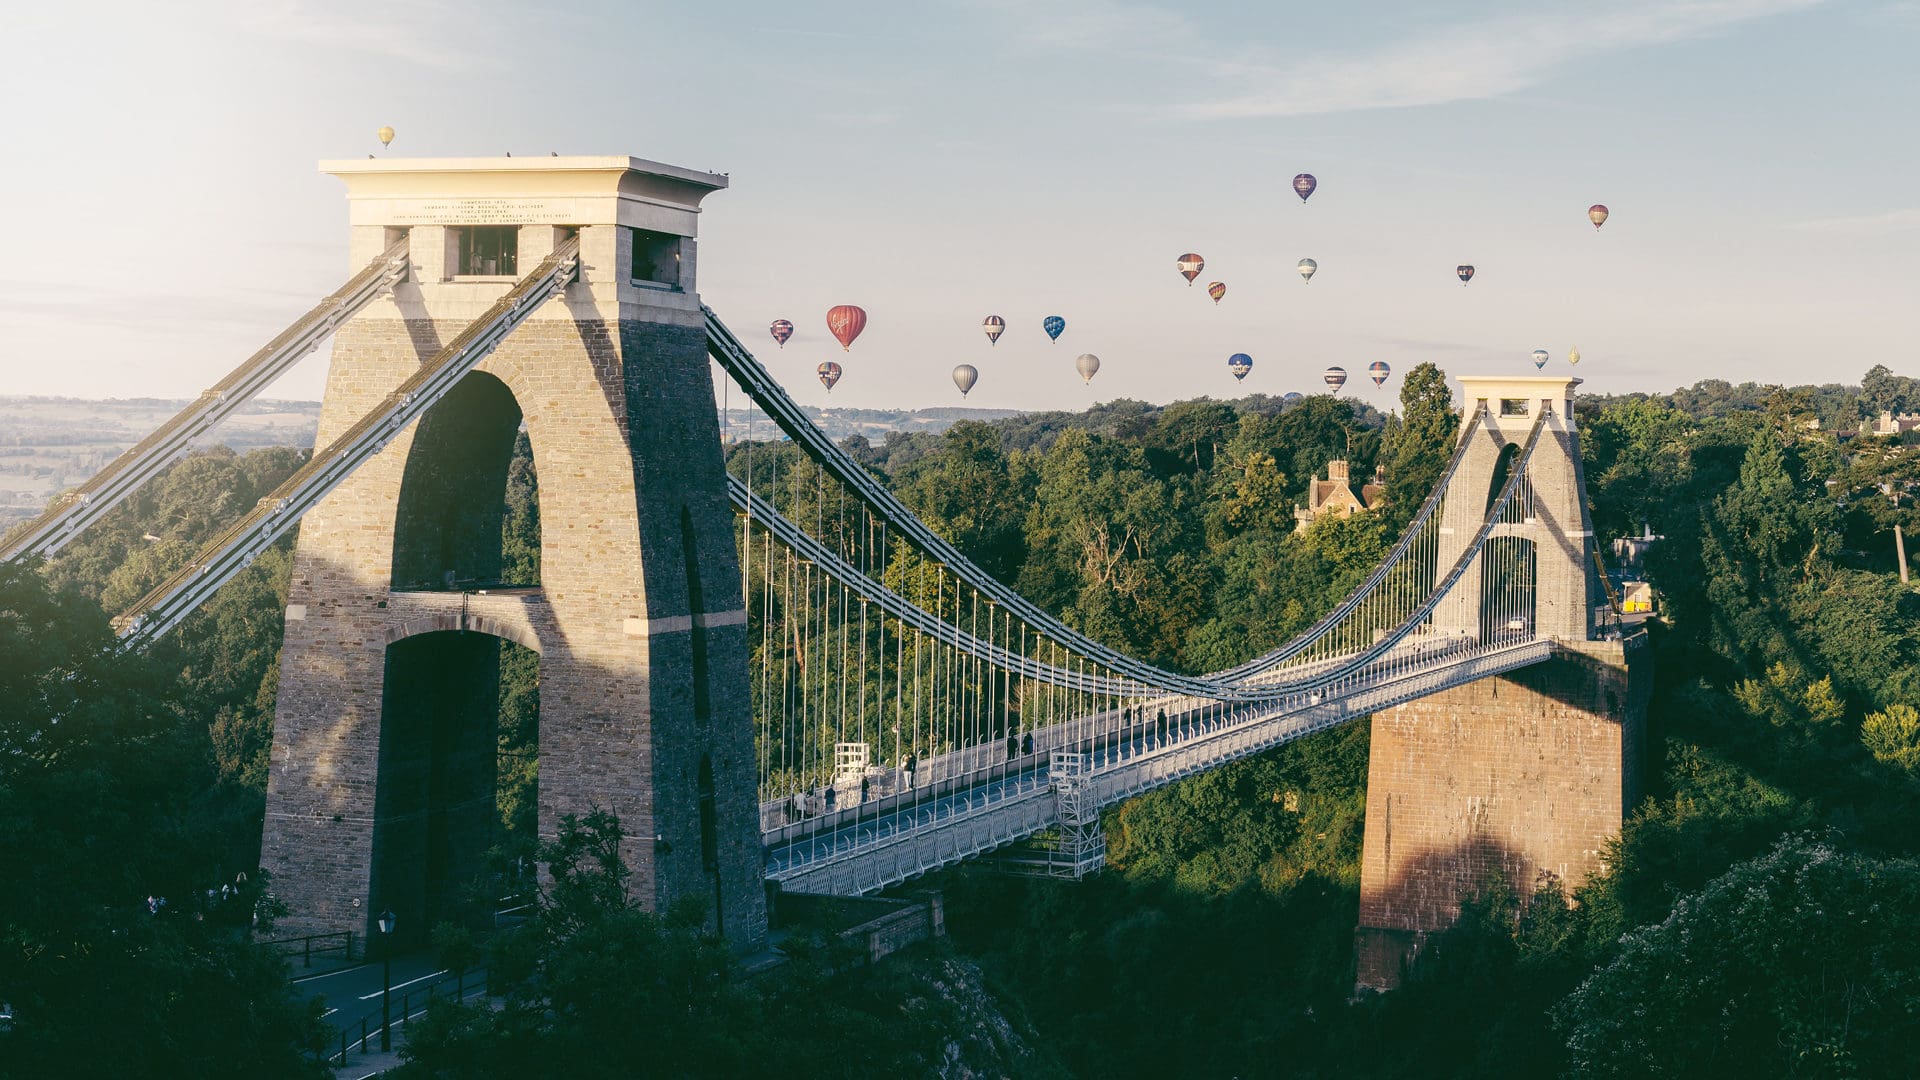  Suspension Bridge with balloons